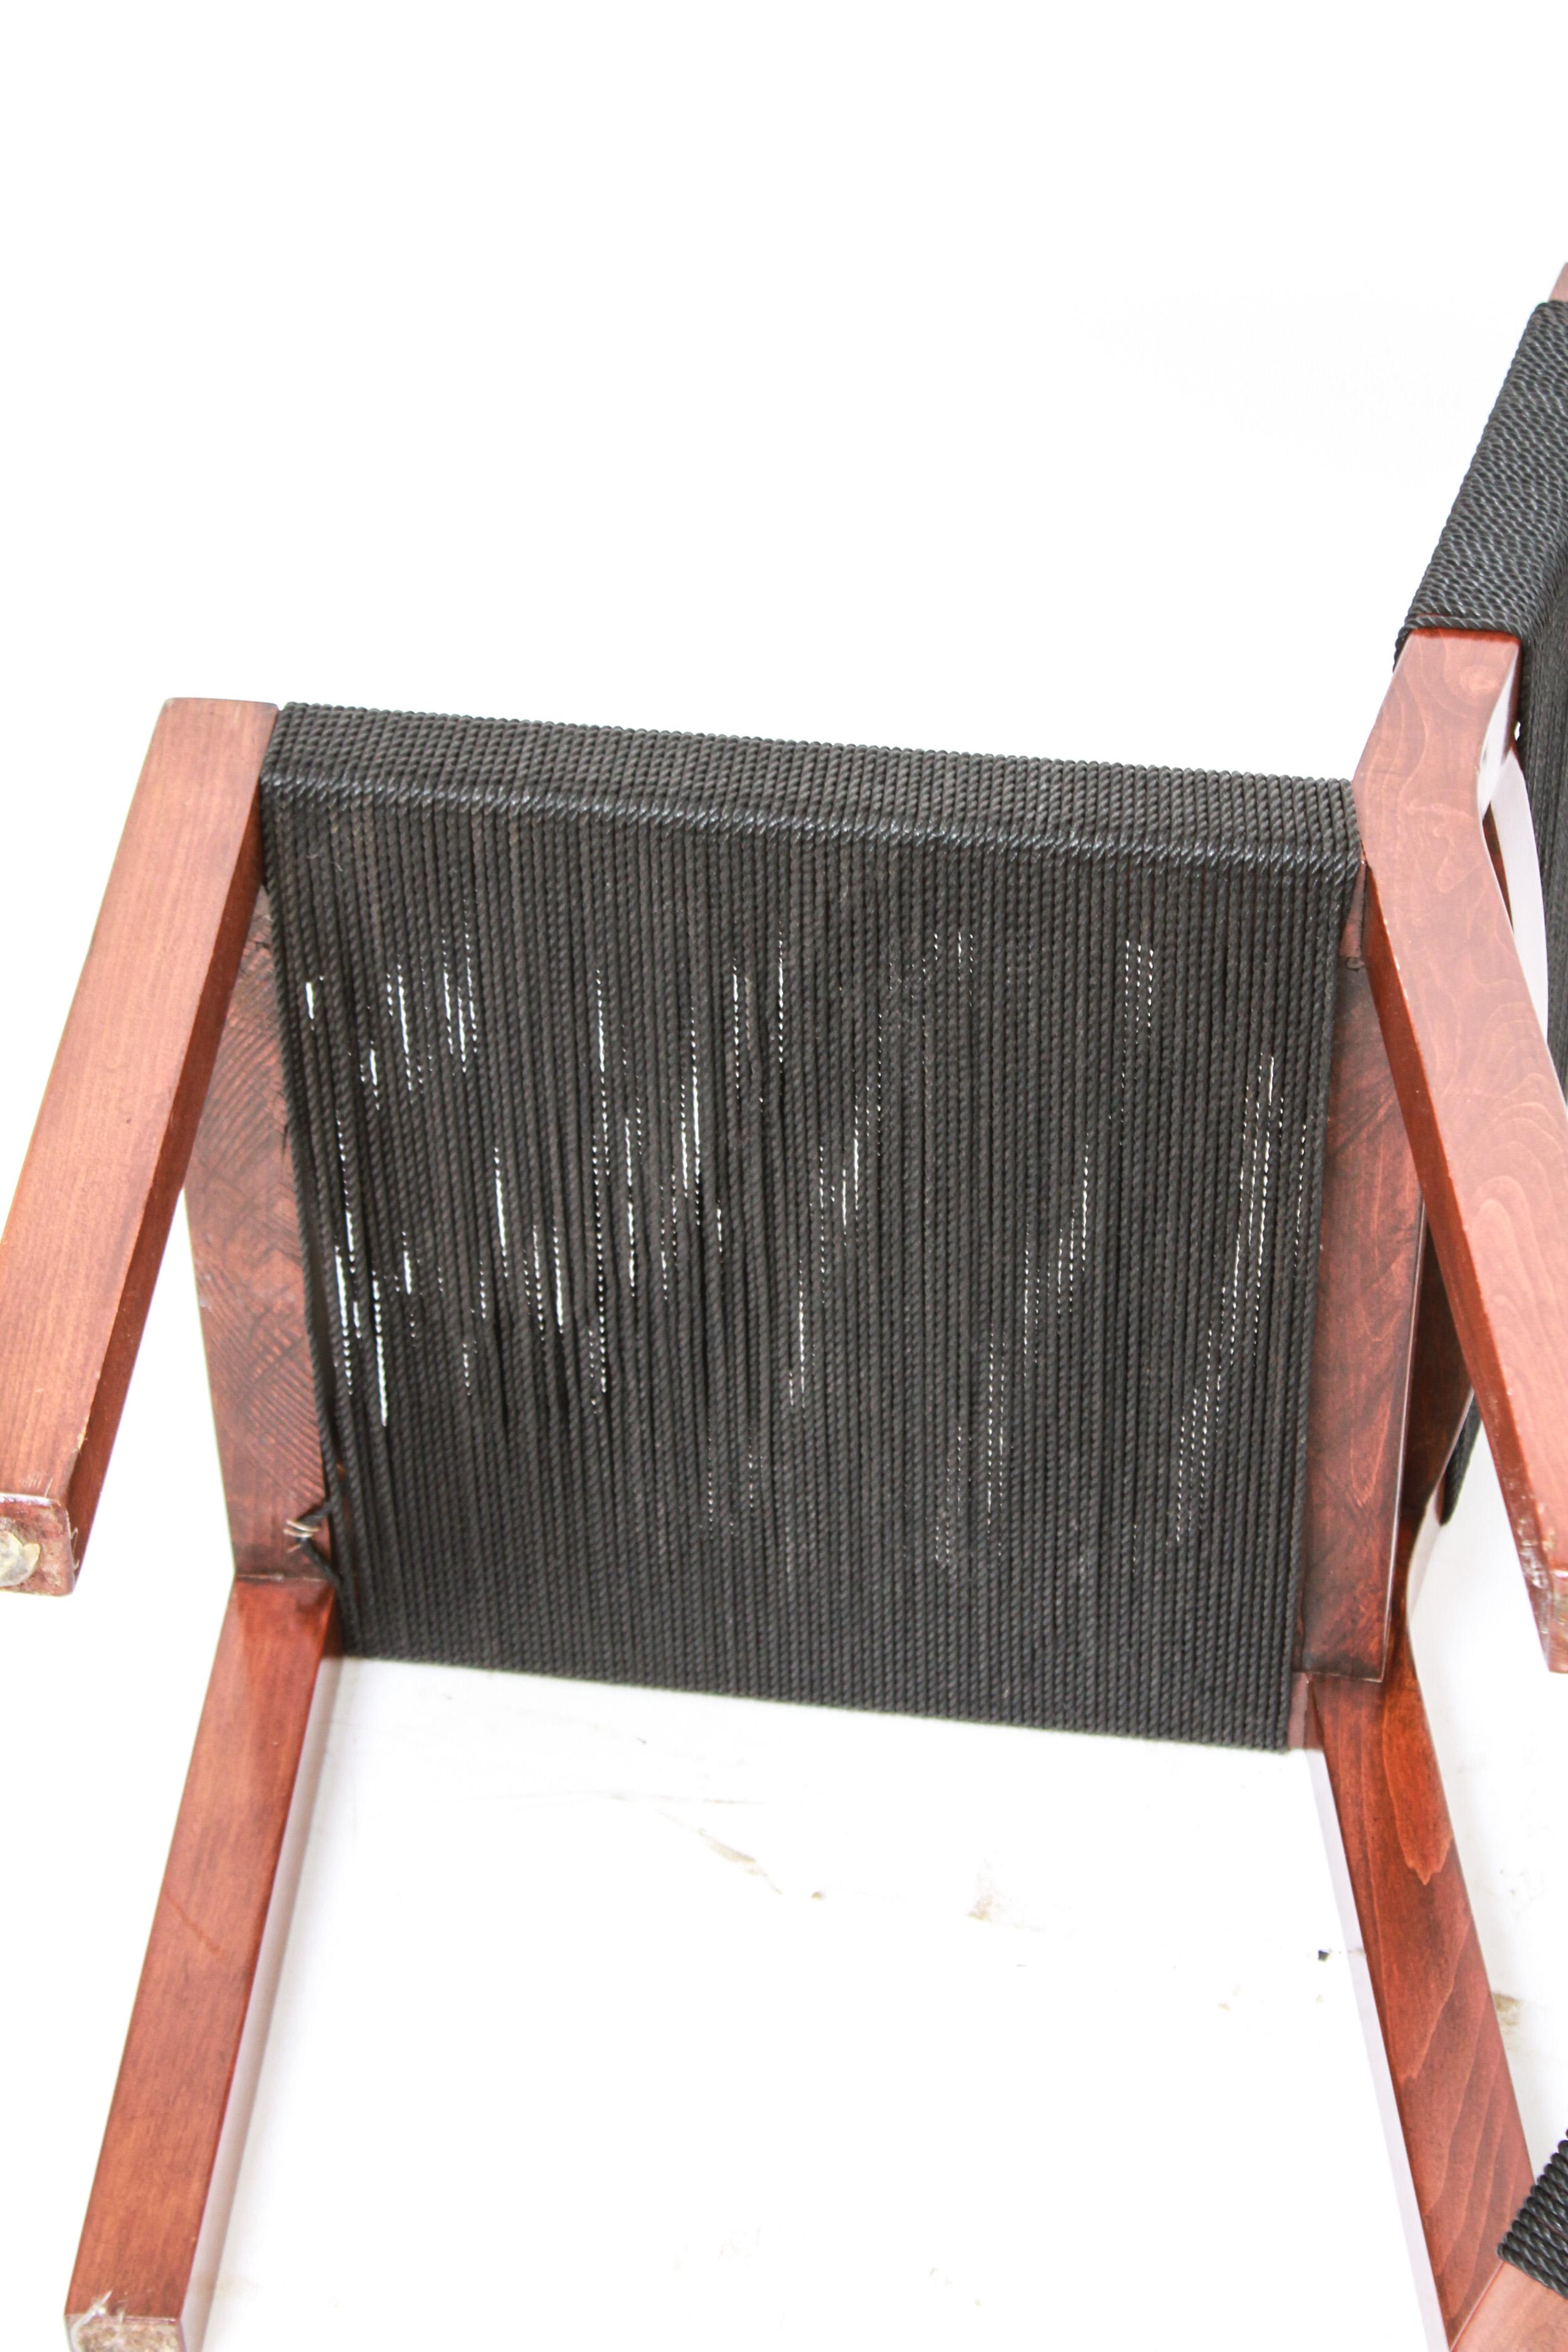 Van Keppel-Greene Modern Side Chairs 2